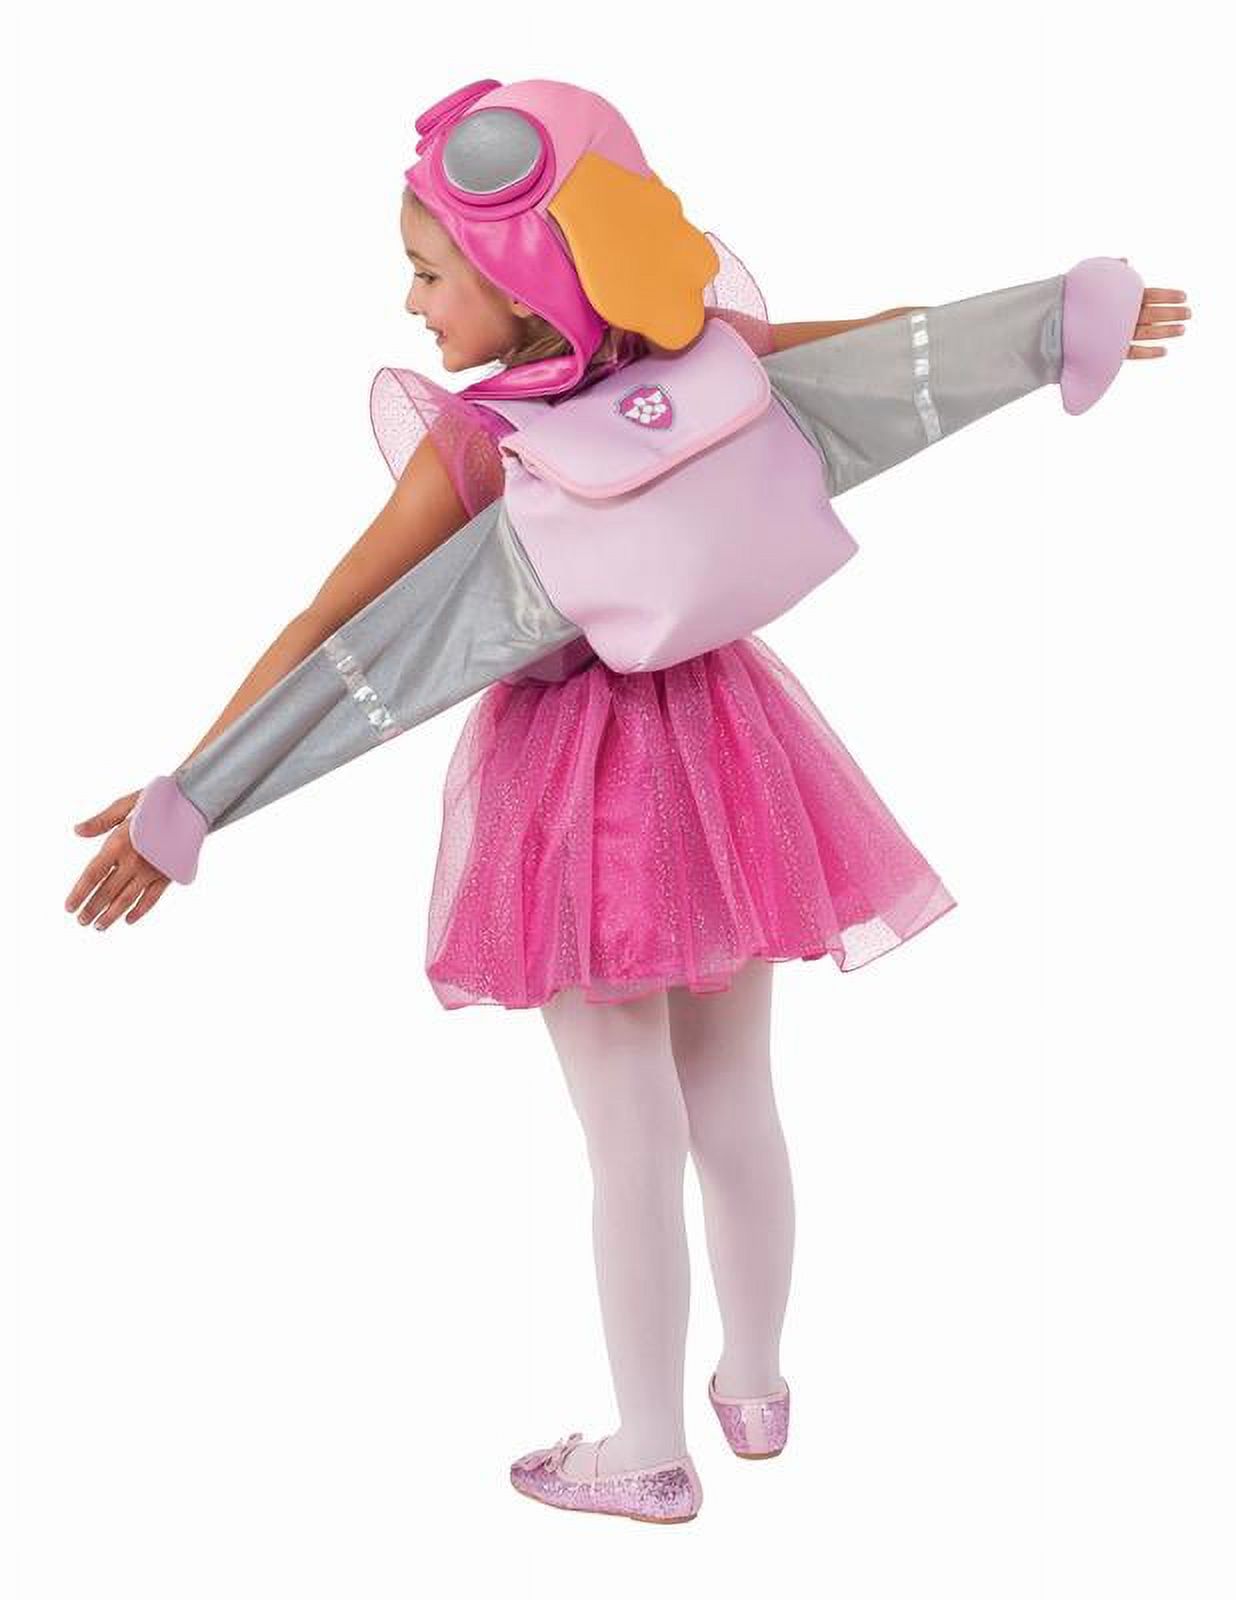 Nickelodeon Skye Paw Patrol Girl's Halloween Fancy-Dress Costume for Toddler, 3T-4T - image 3 of 5